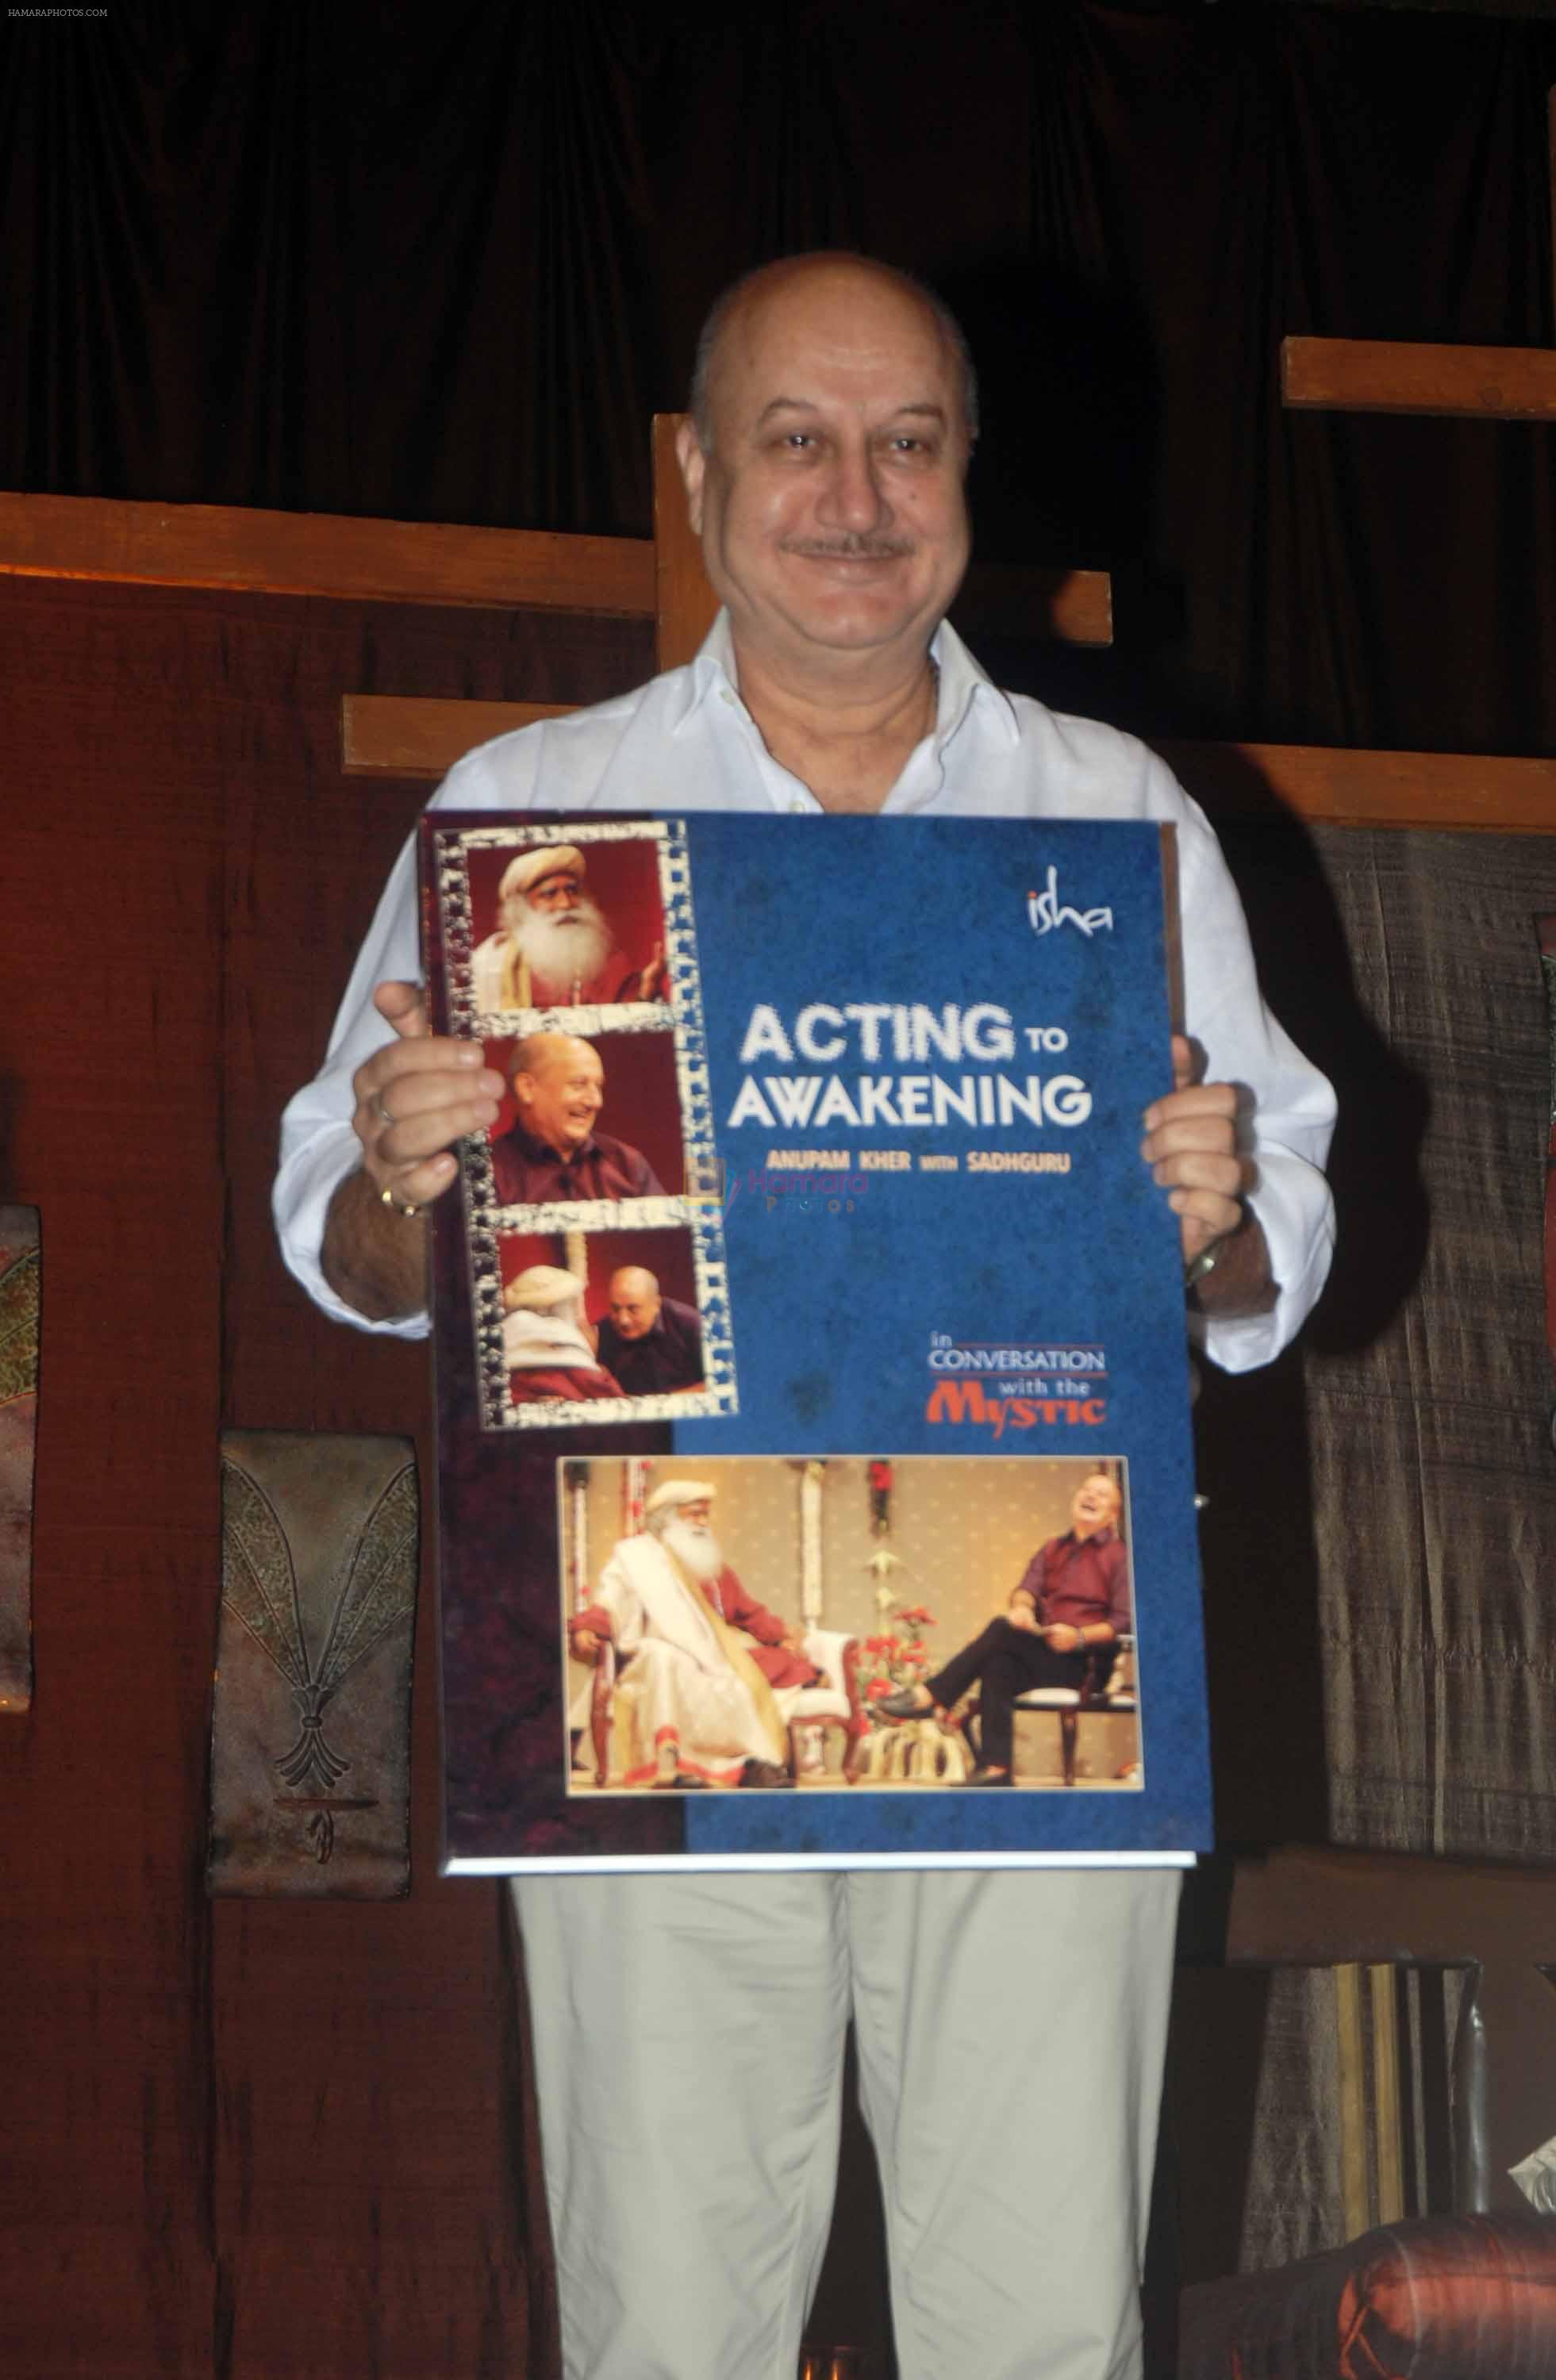 Anupam Kher releases the DVD Acting to Awakening in Mumbai on 10th Jan 2015